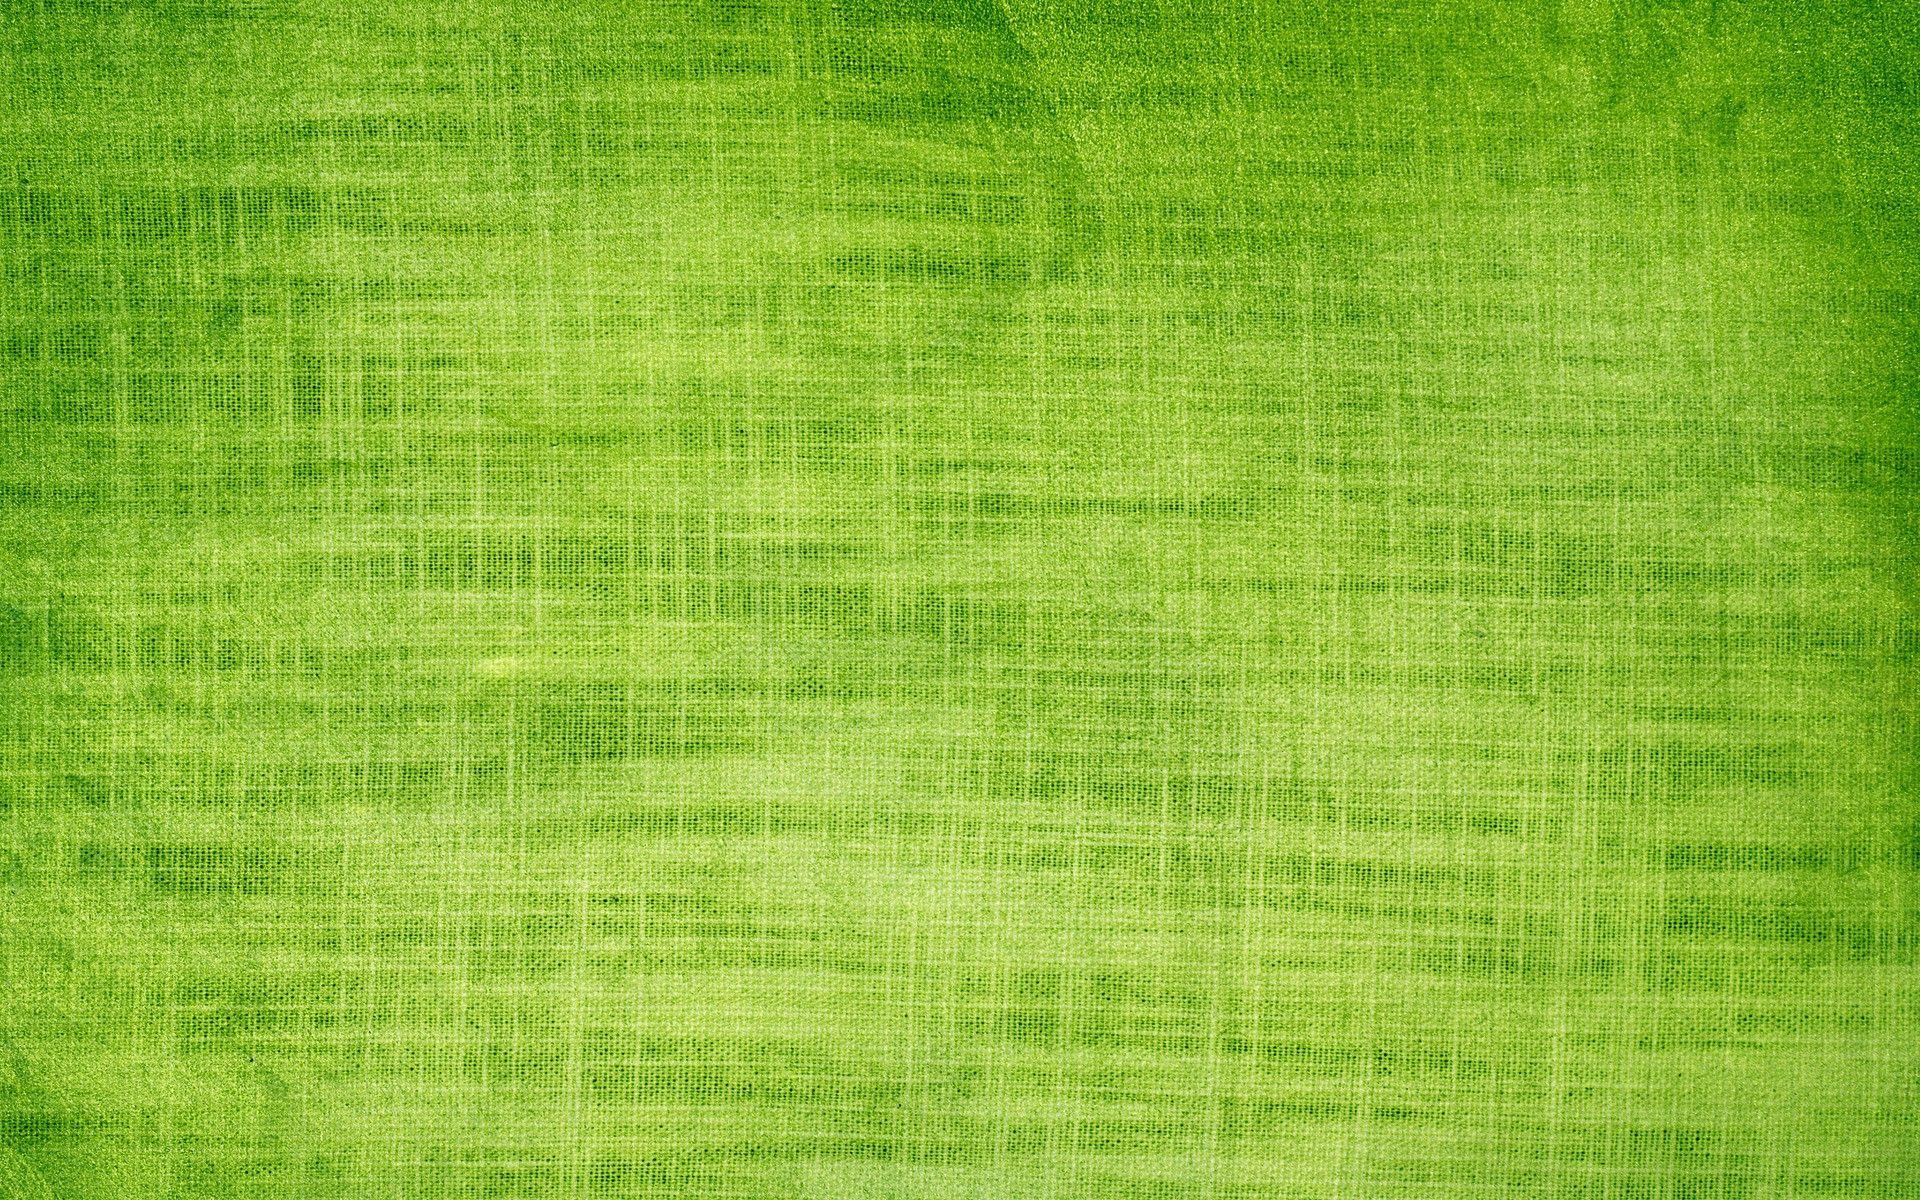 Plain Green Background